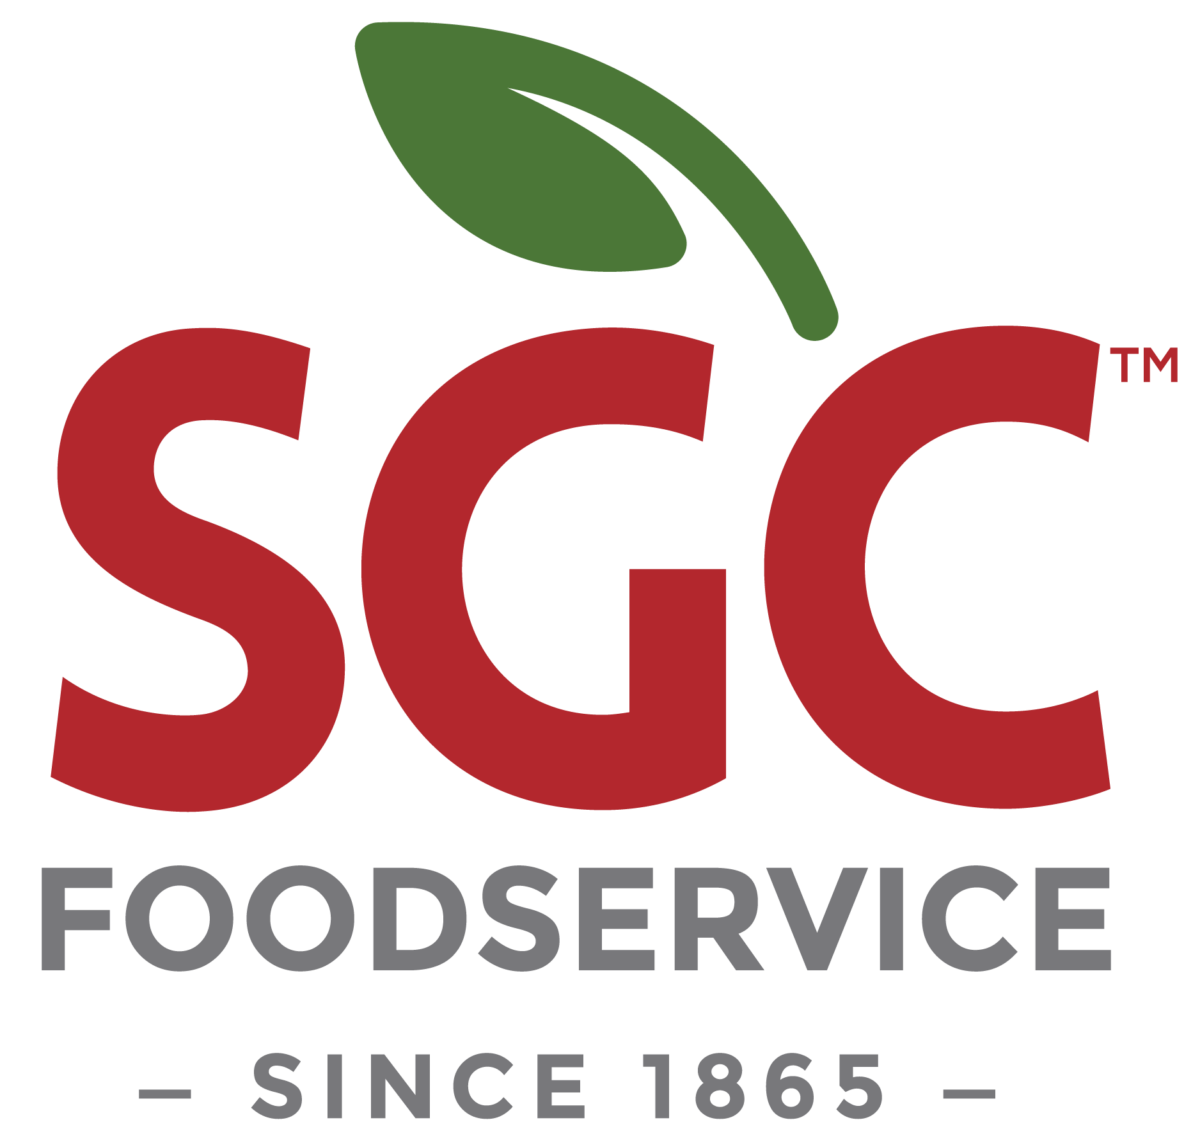 SGC Foodservice